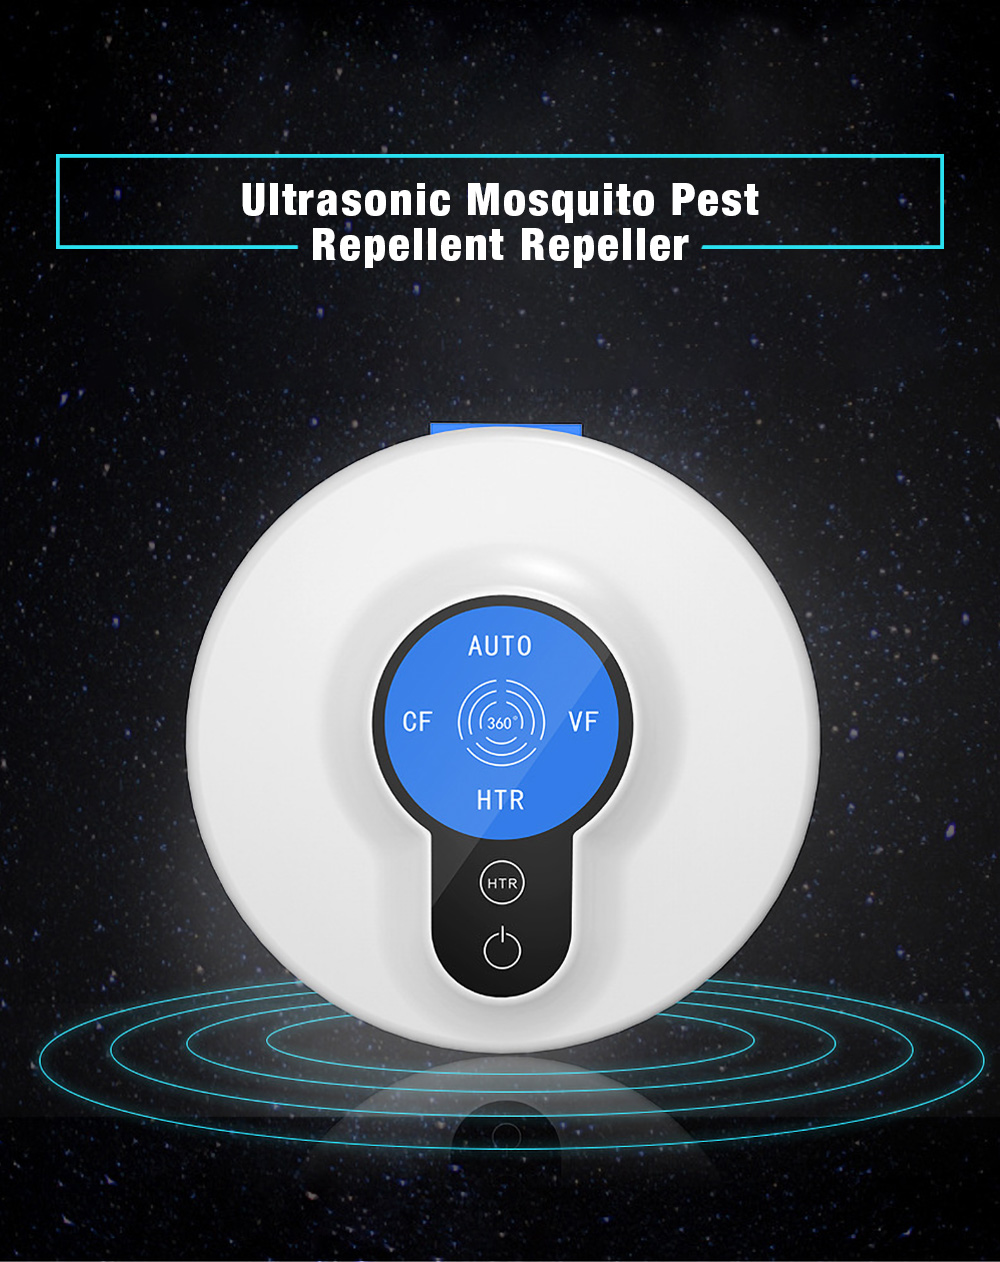 Ultrasonic Mosquito Pest Repellent Repeller